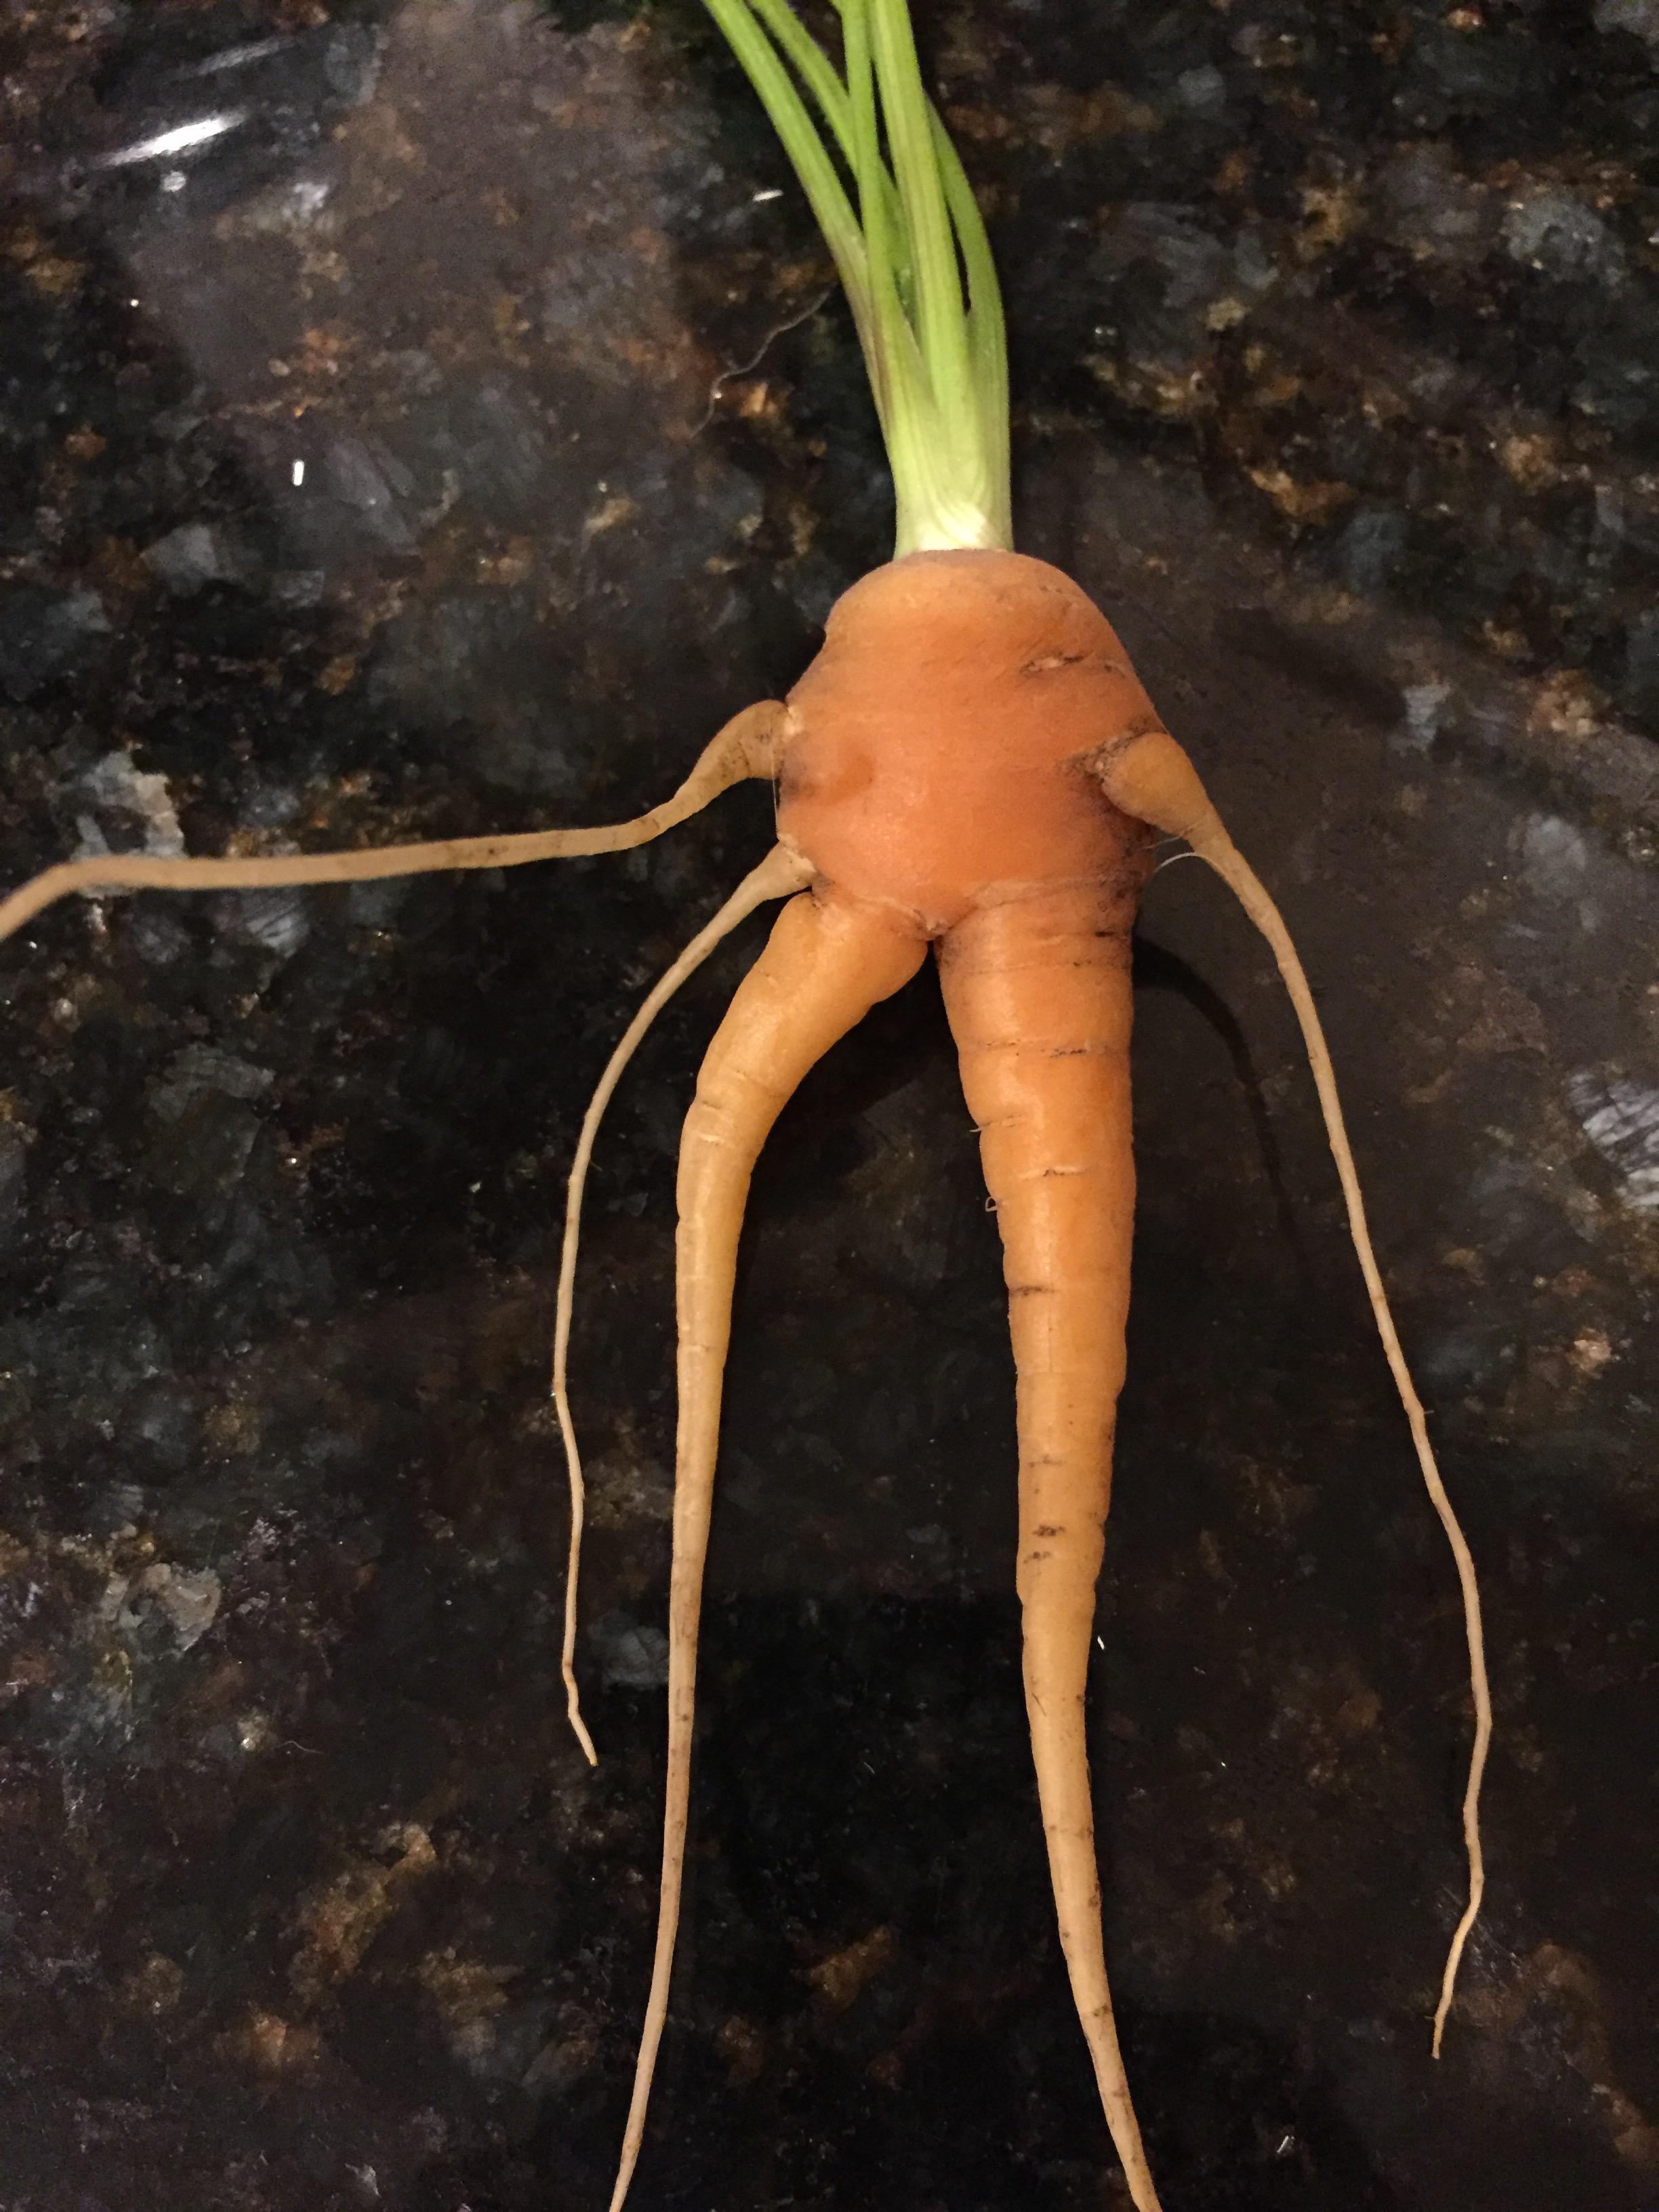 Carrot crossing its legs : r/mildlyinteresting